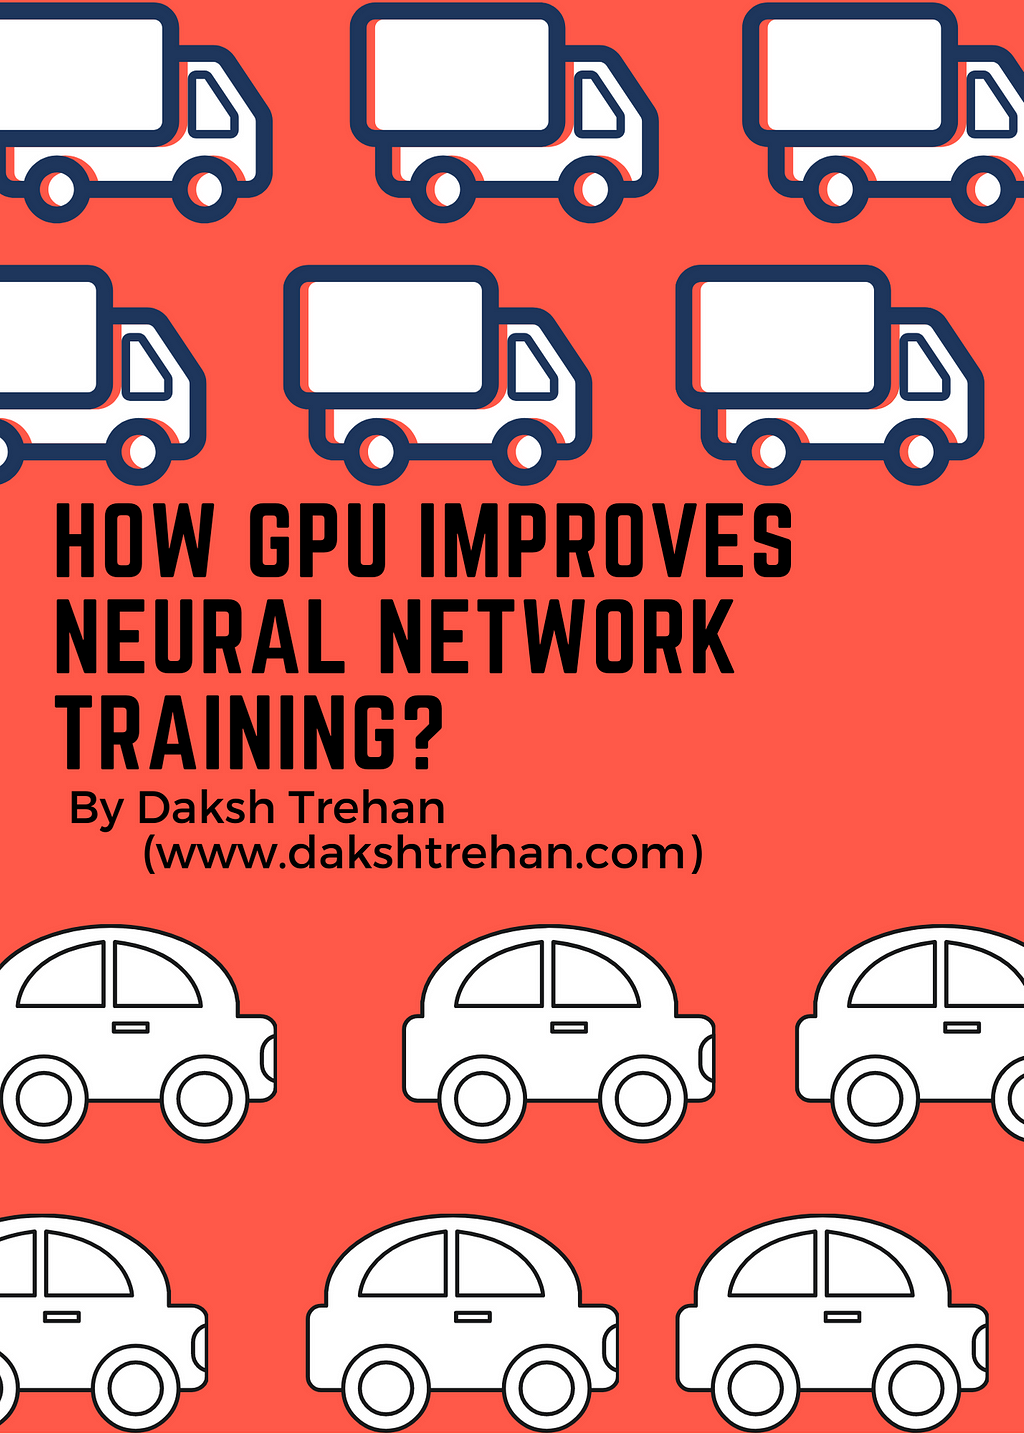 How do GPUs Improve Neural Network Training?